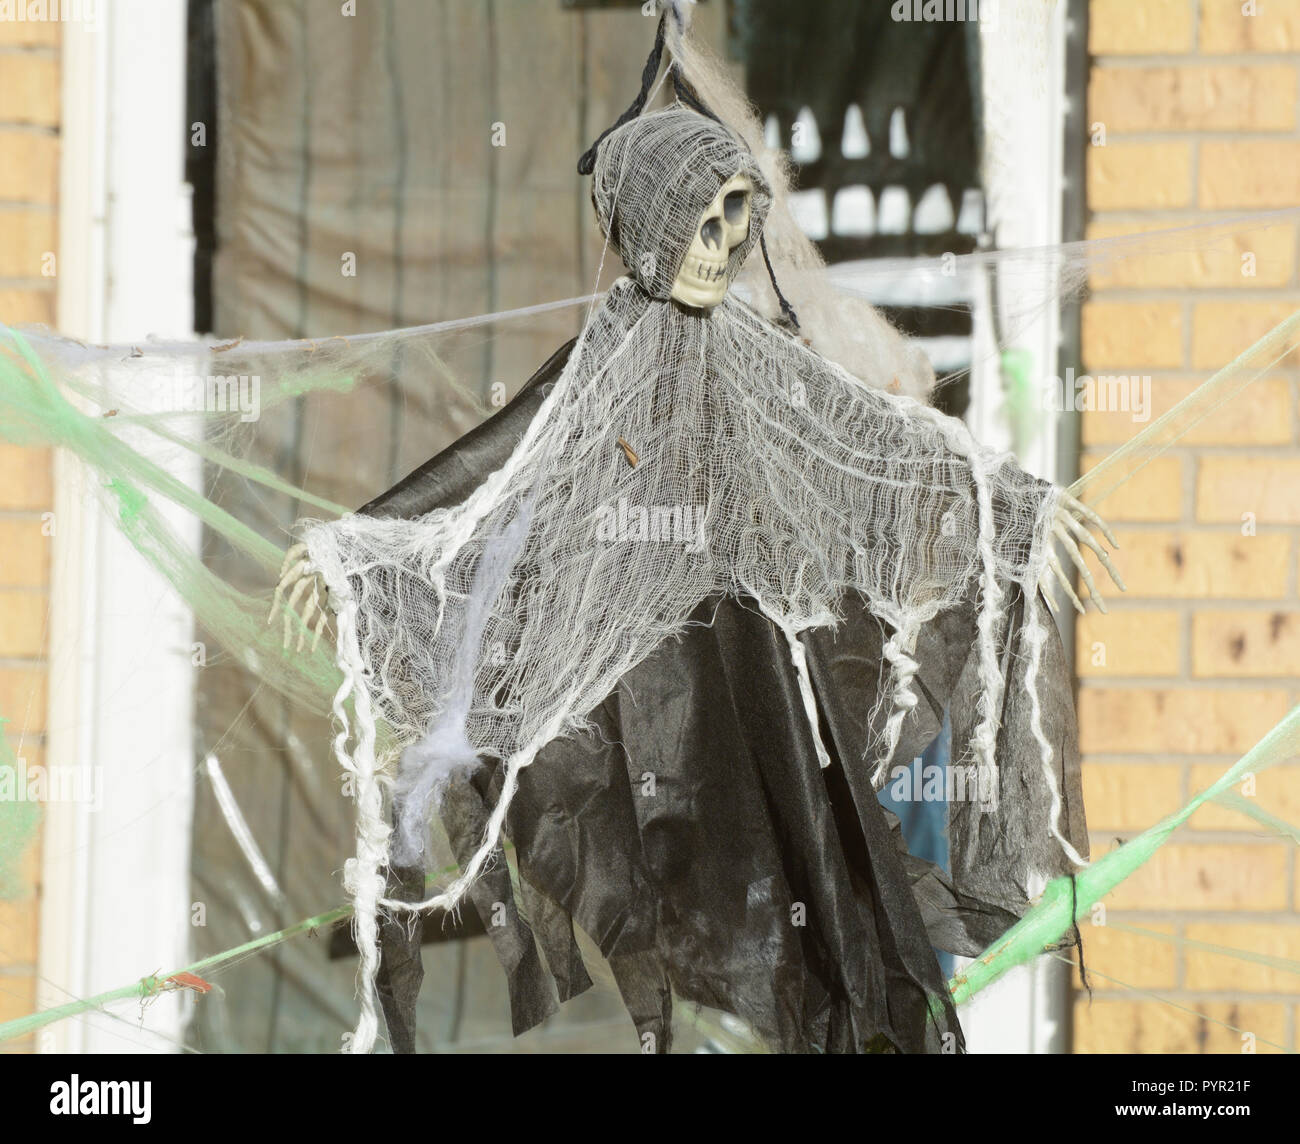 Halloween skeleton decoration dressed in black robe with white shawl blocking access across doorway Stock Photo